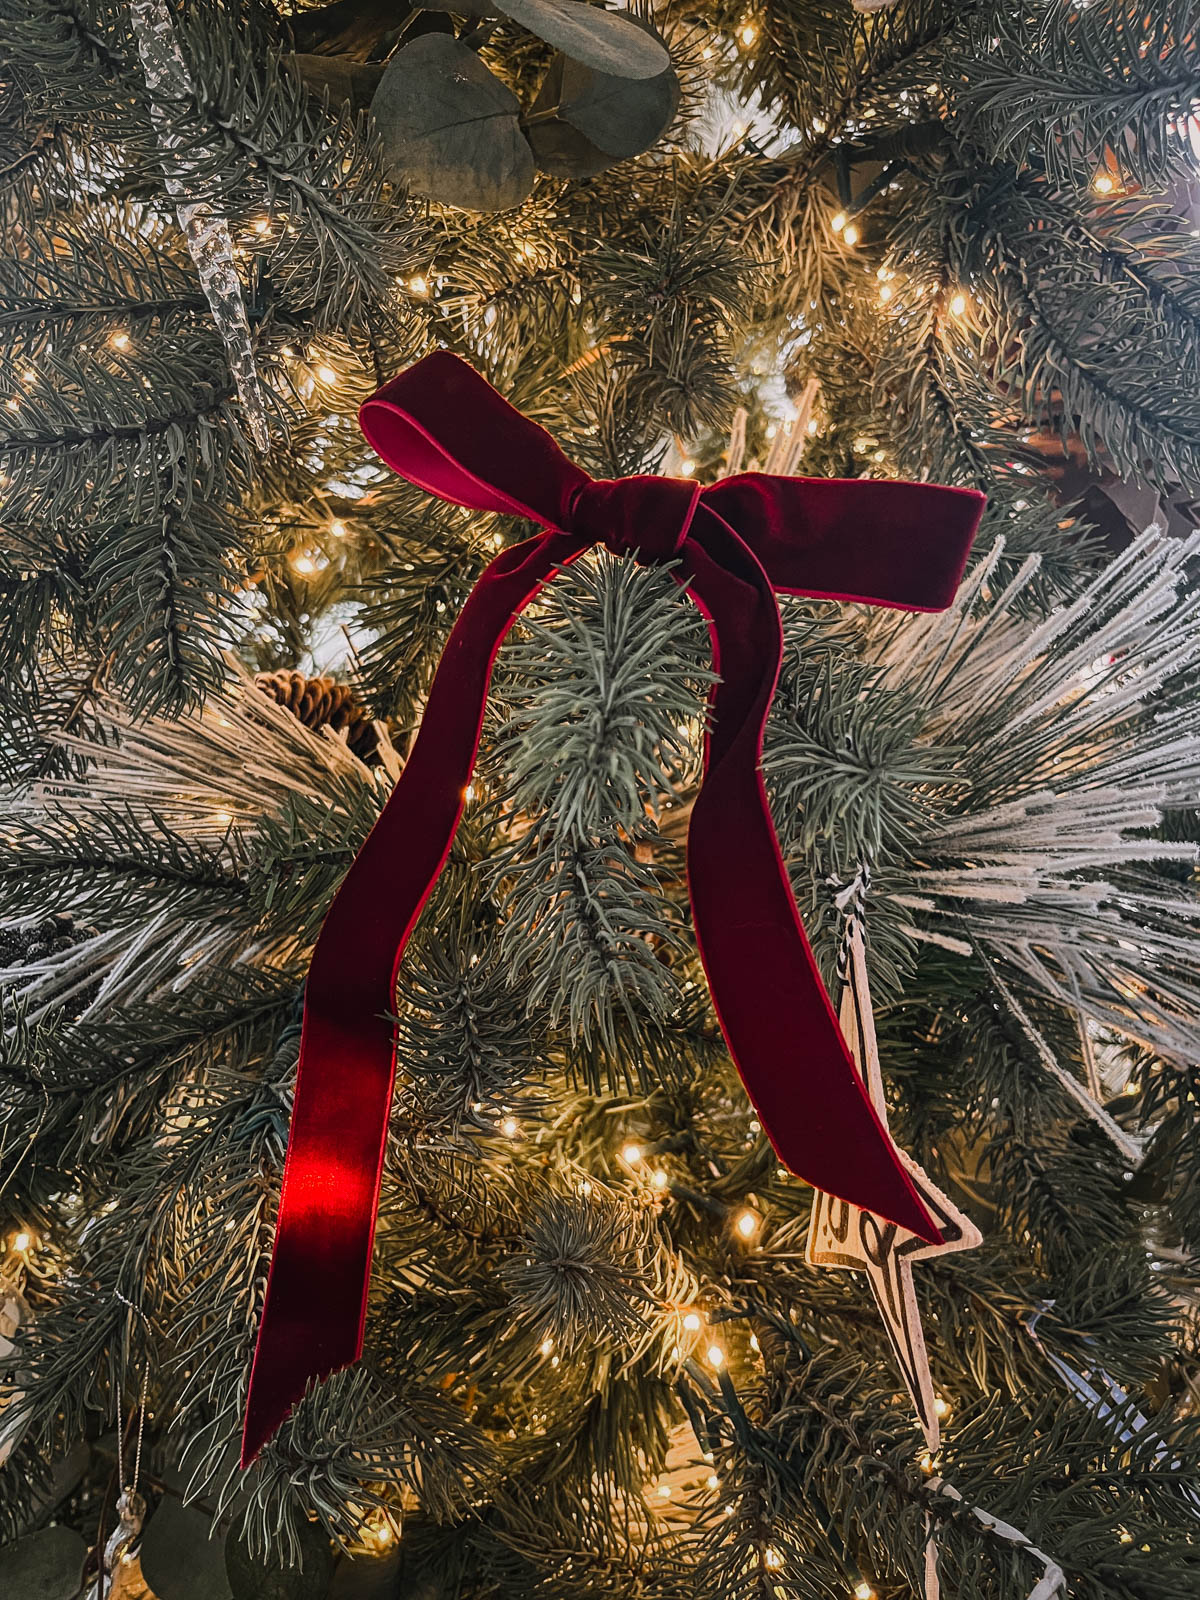 velvet Ribbon tied on tree as an ornament